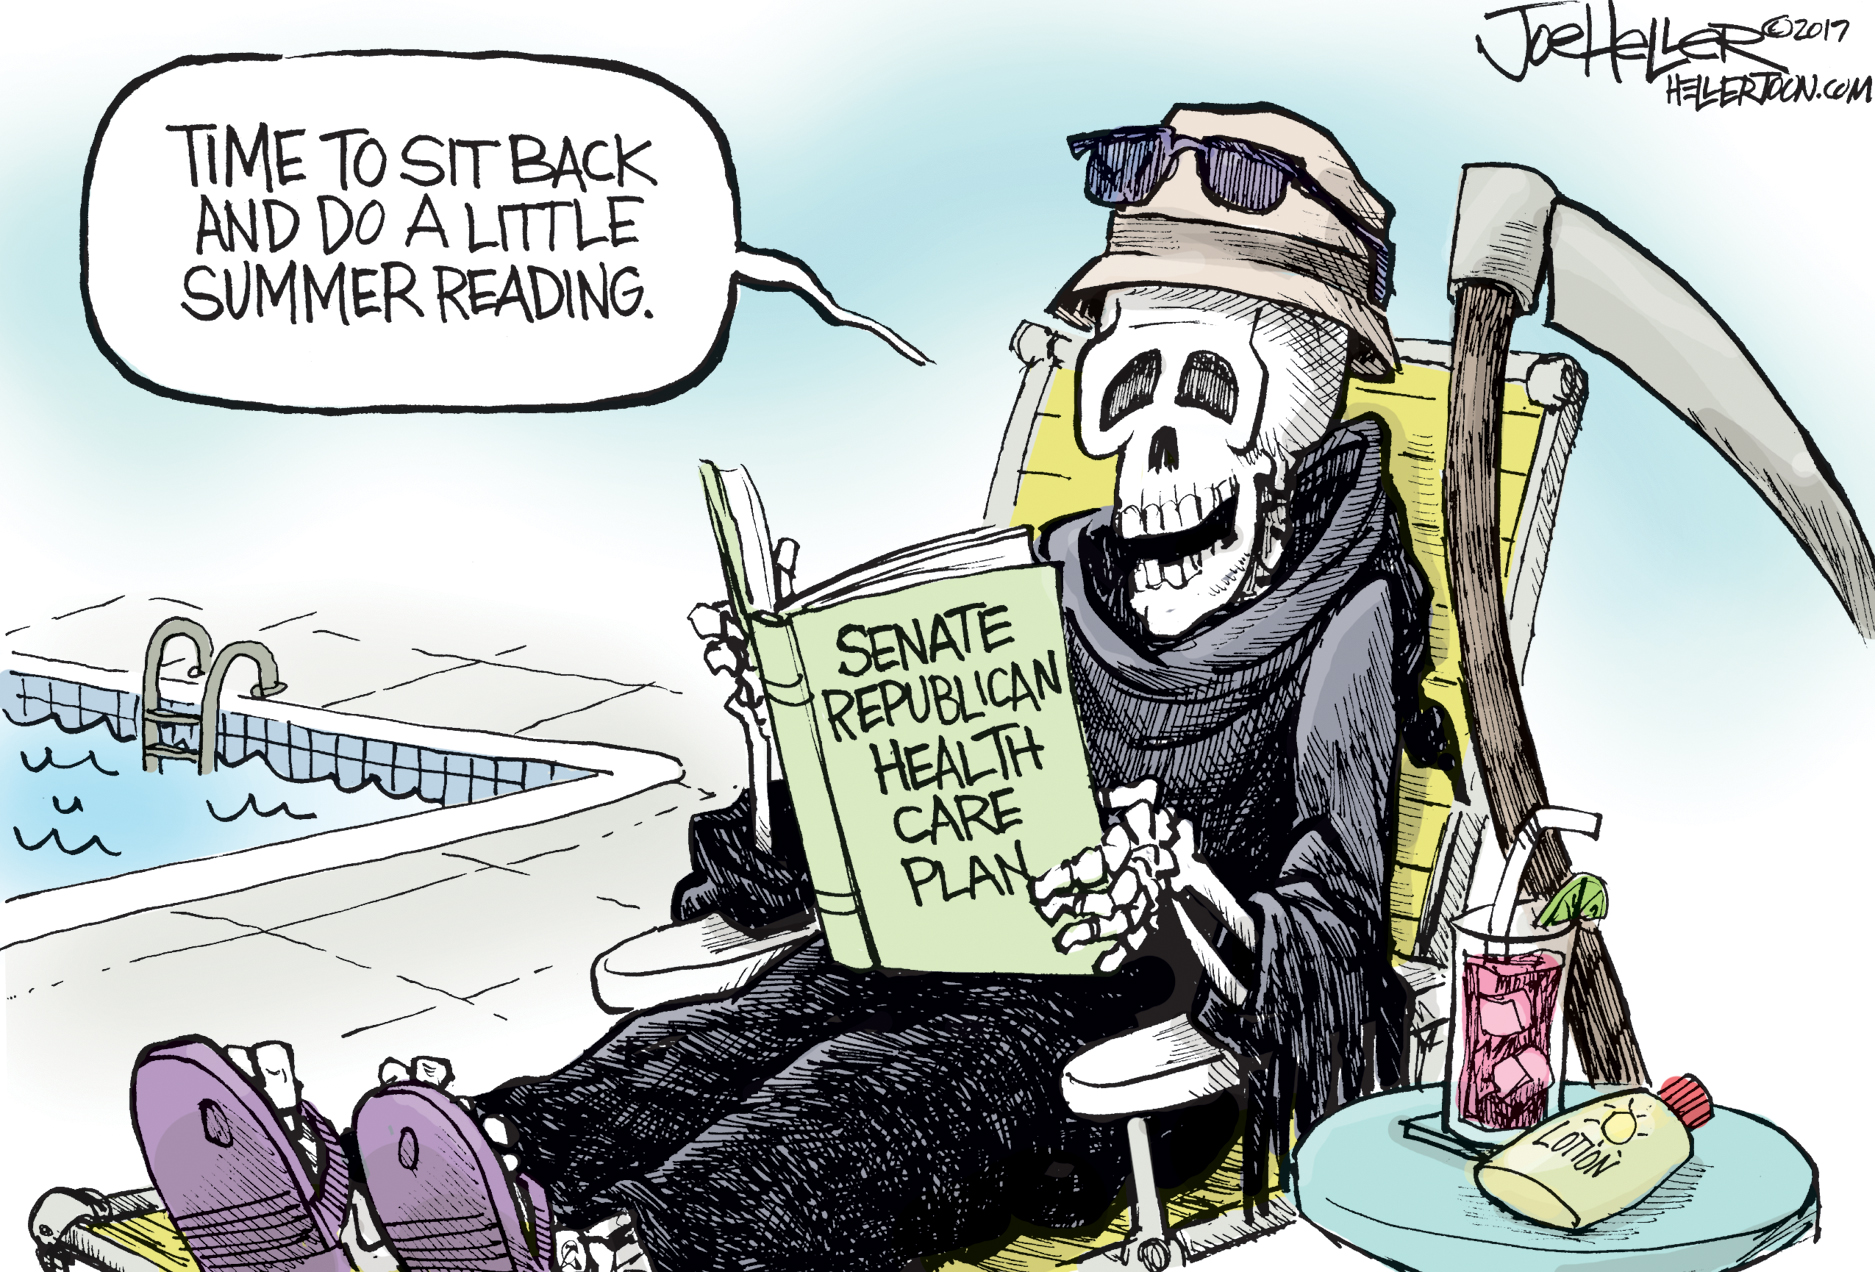 Political cartoon . Senate health care reform death summer reading